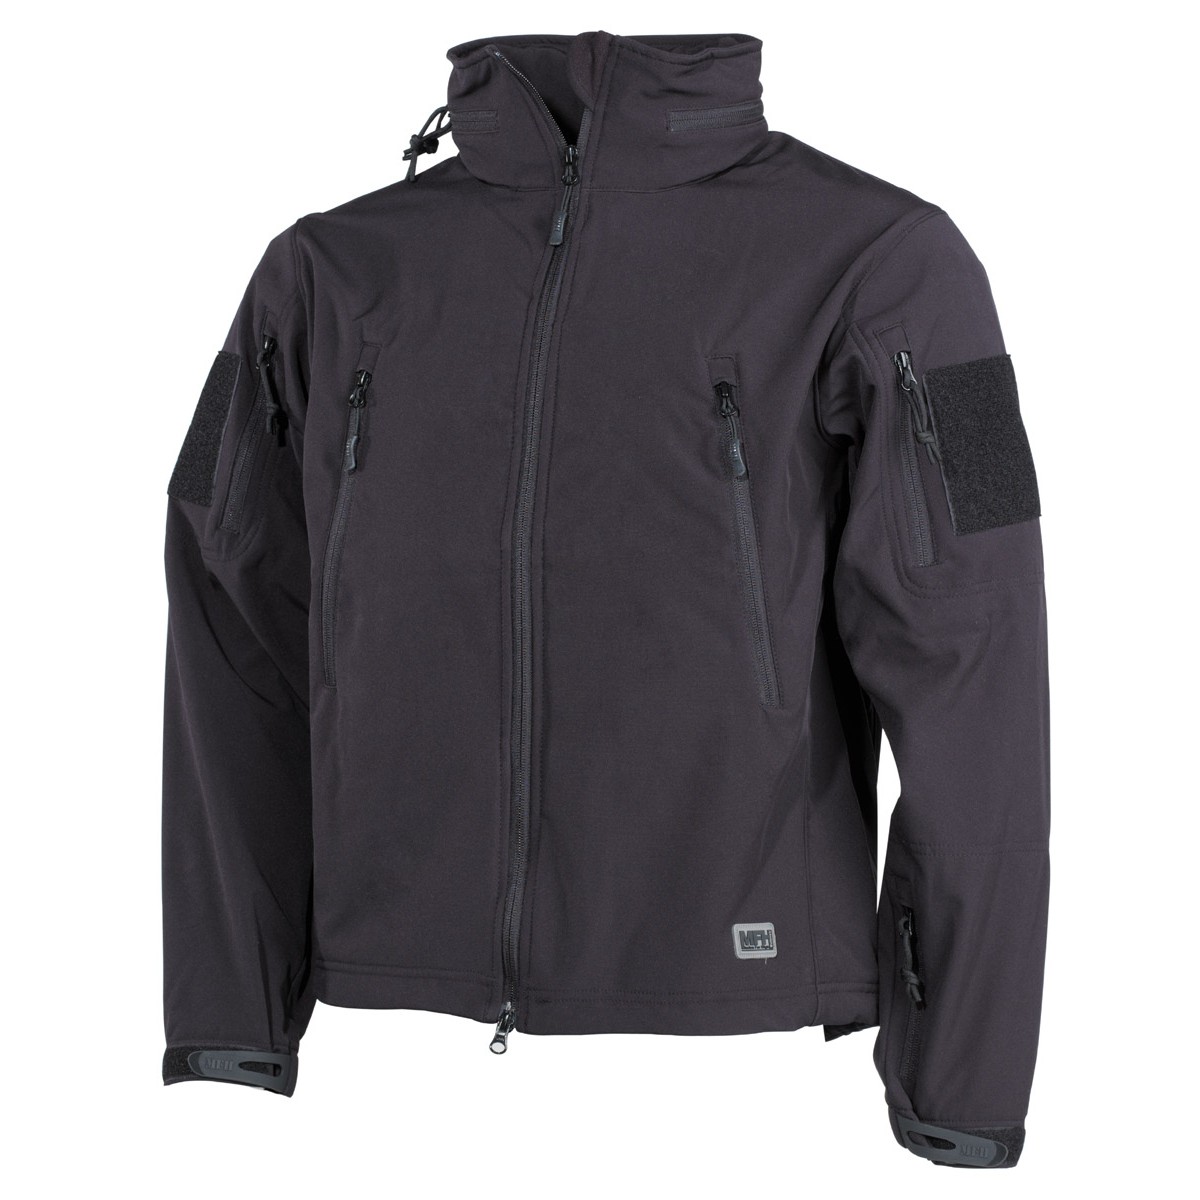 Premium High Defense Tactical Waterproof Soft Shell Jacket SCORPION - Black